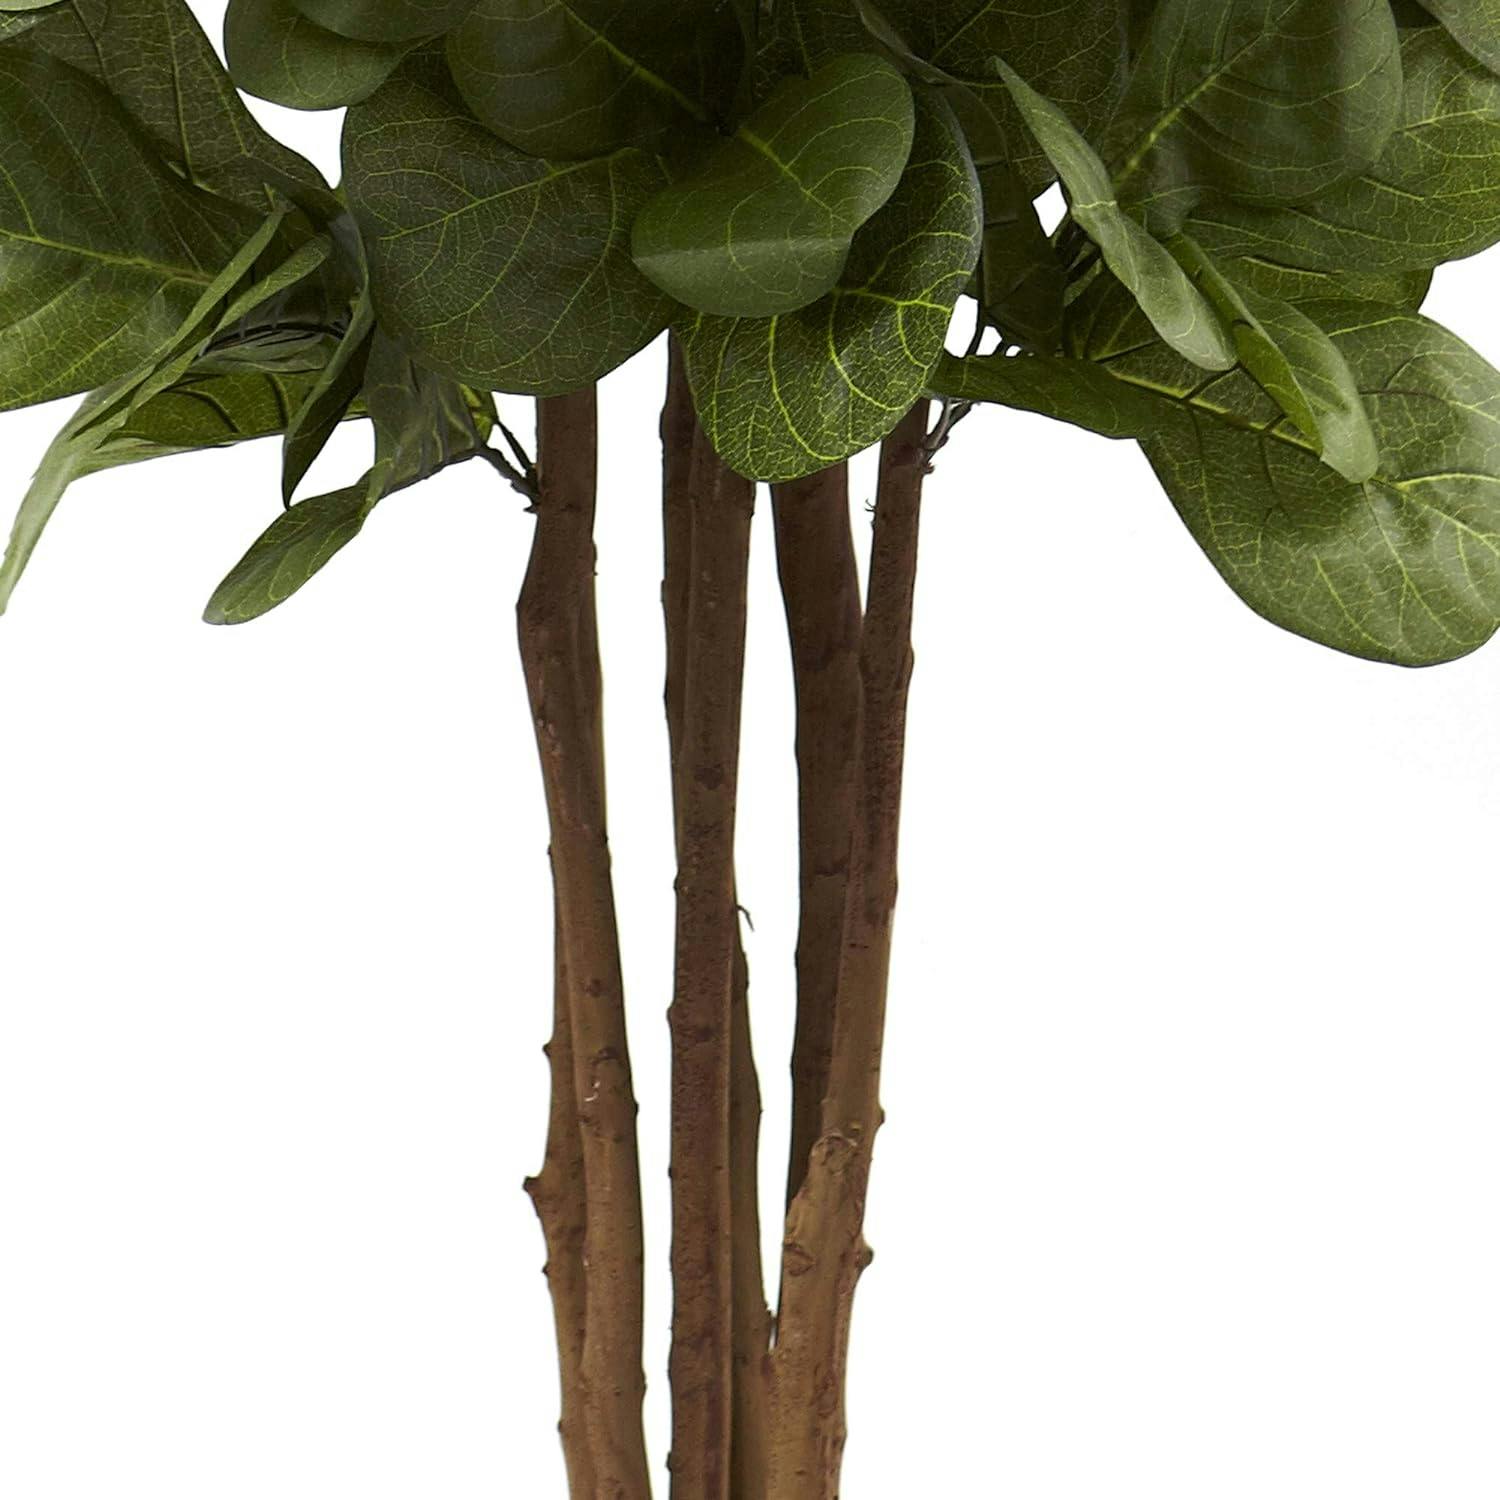 Verdant Charm 6' Silk Fiddle Leaf Fig in Decorative Planter